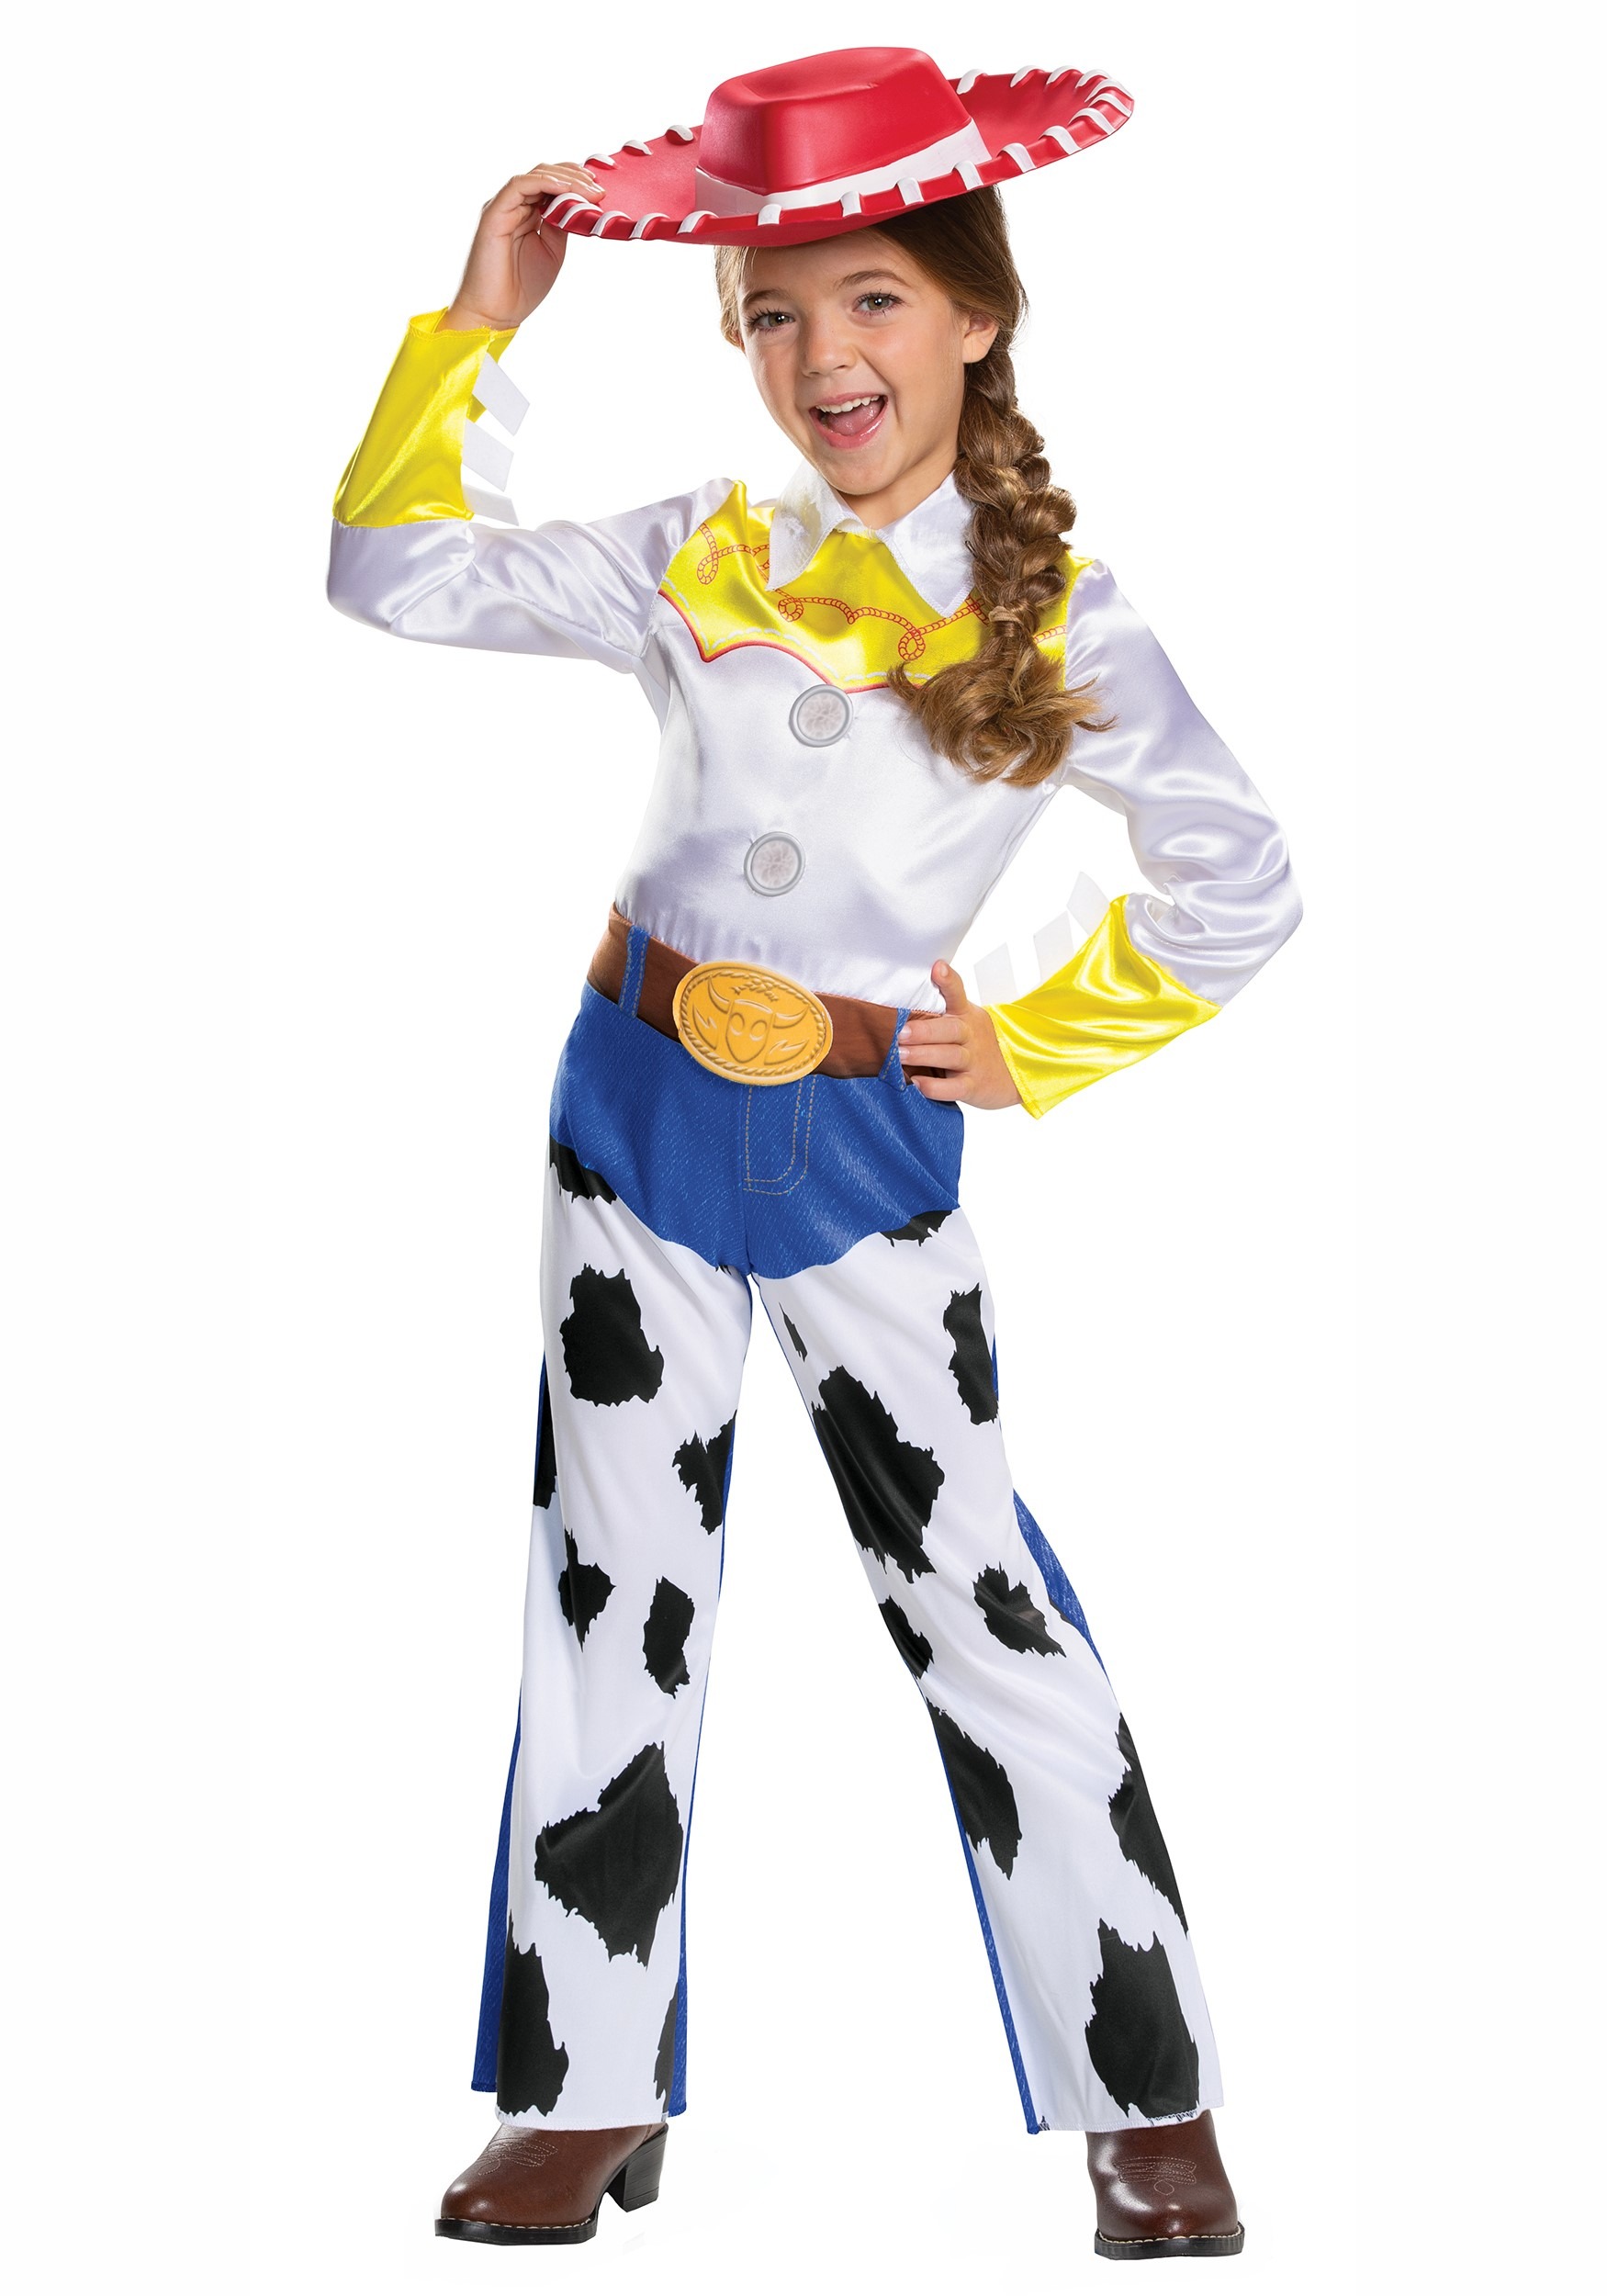 Toy Story Jessie Costume Accessories